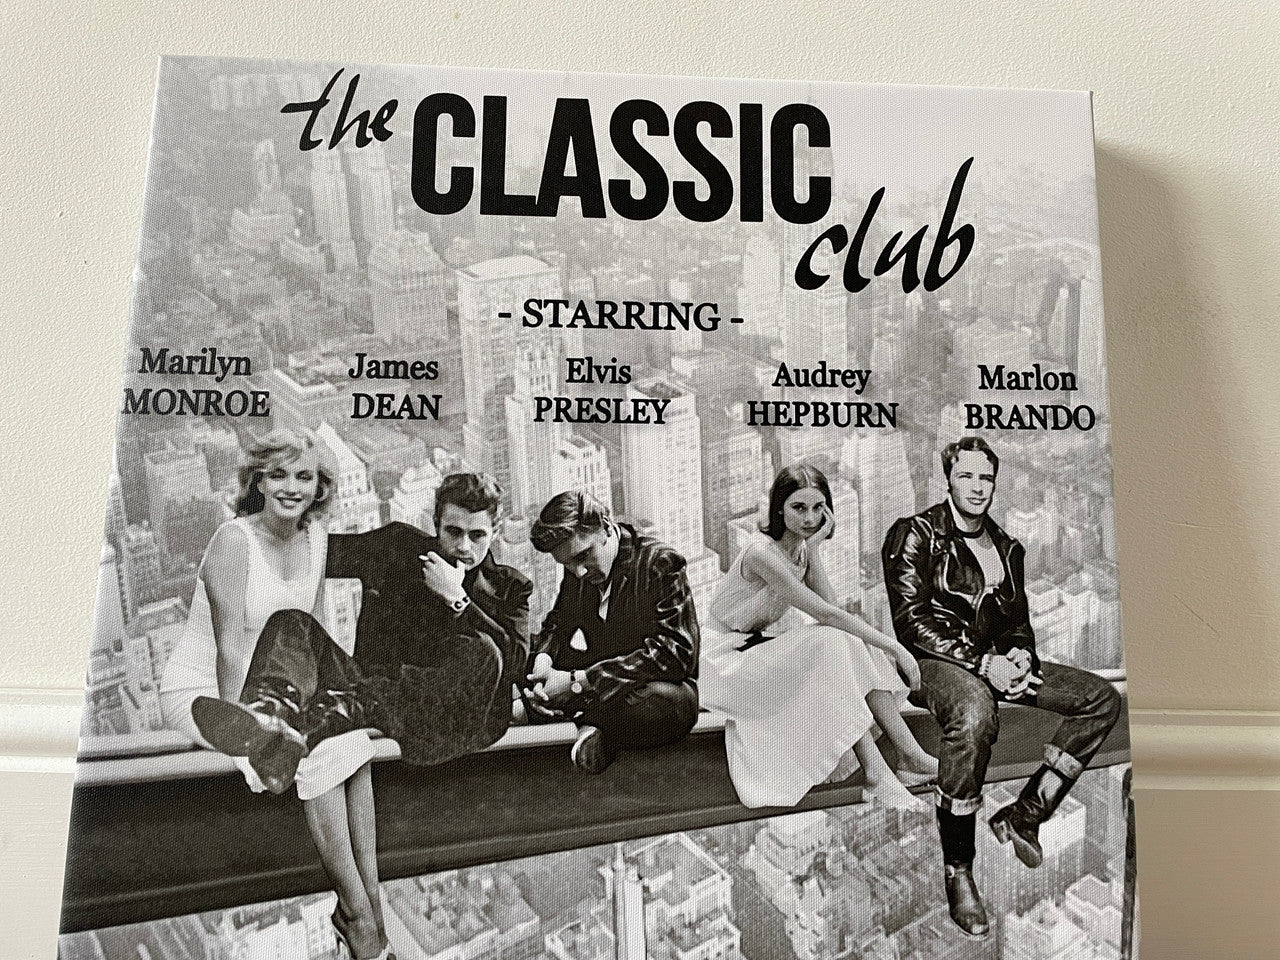 Classic Club KiSS Canvas - Marilyn Monroe James Dean, Elvis, Marlon Brando, Audrey Hepburn - Breakfast Club inspiration- Art, Wall Decor - Unique Home Gift Idea